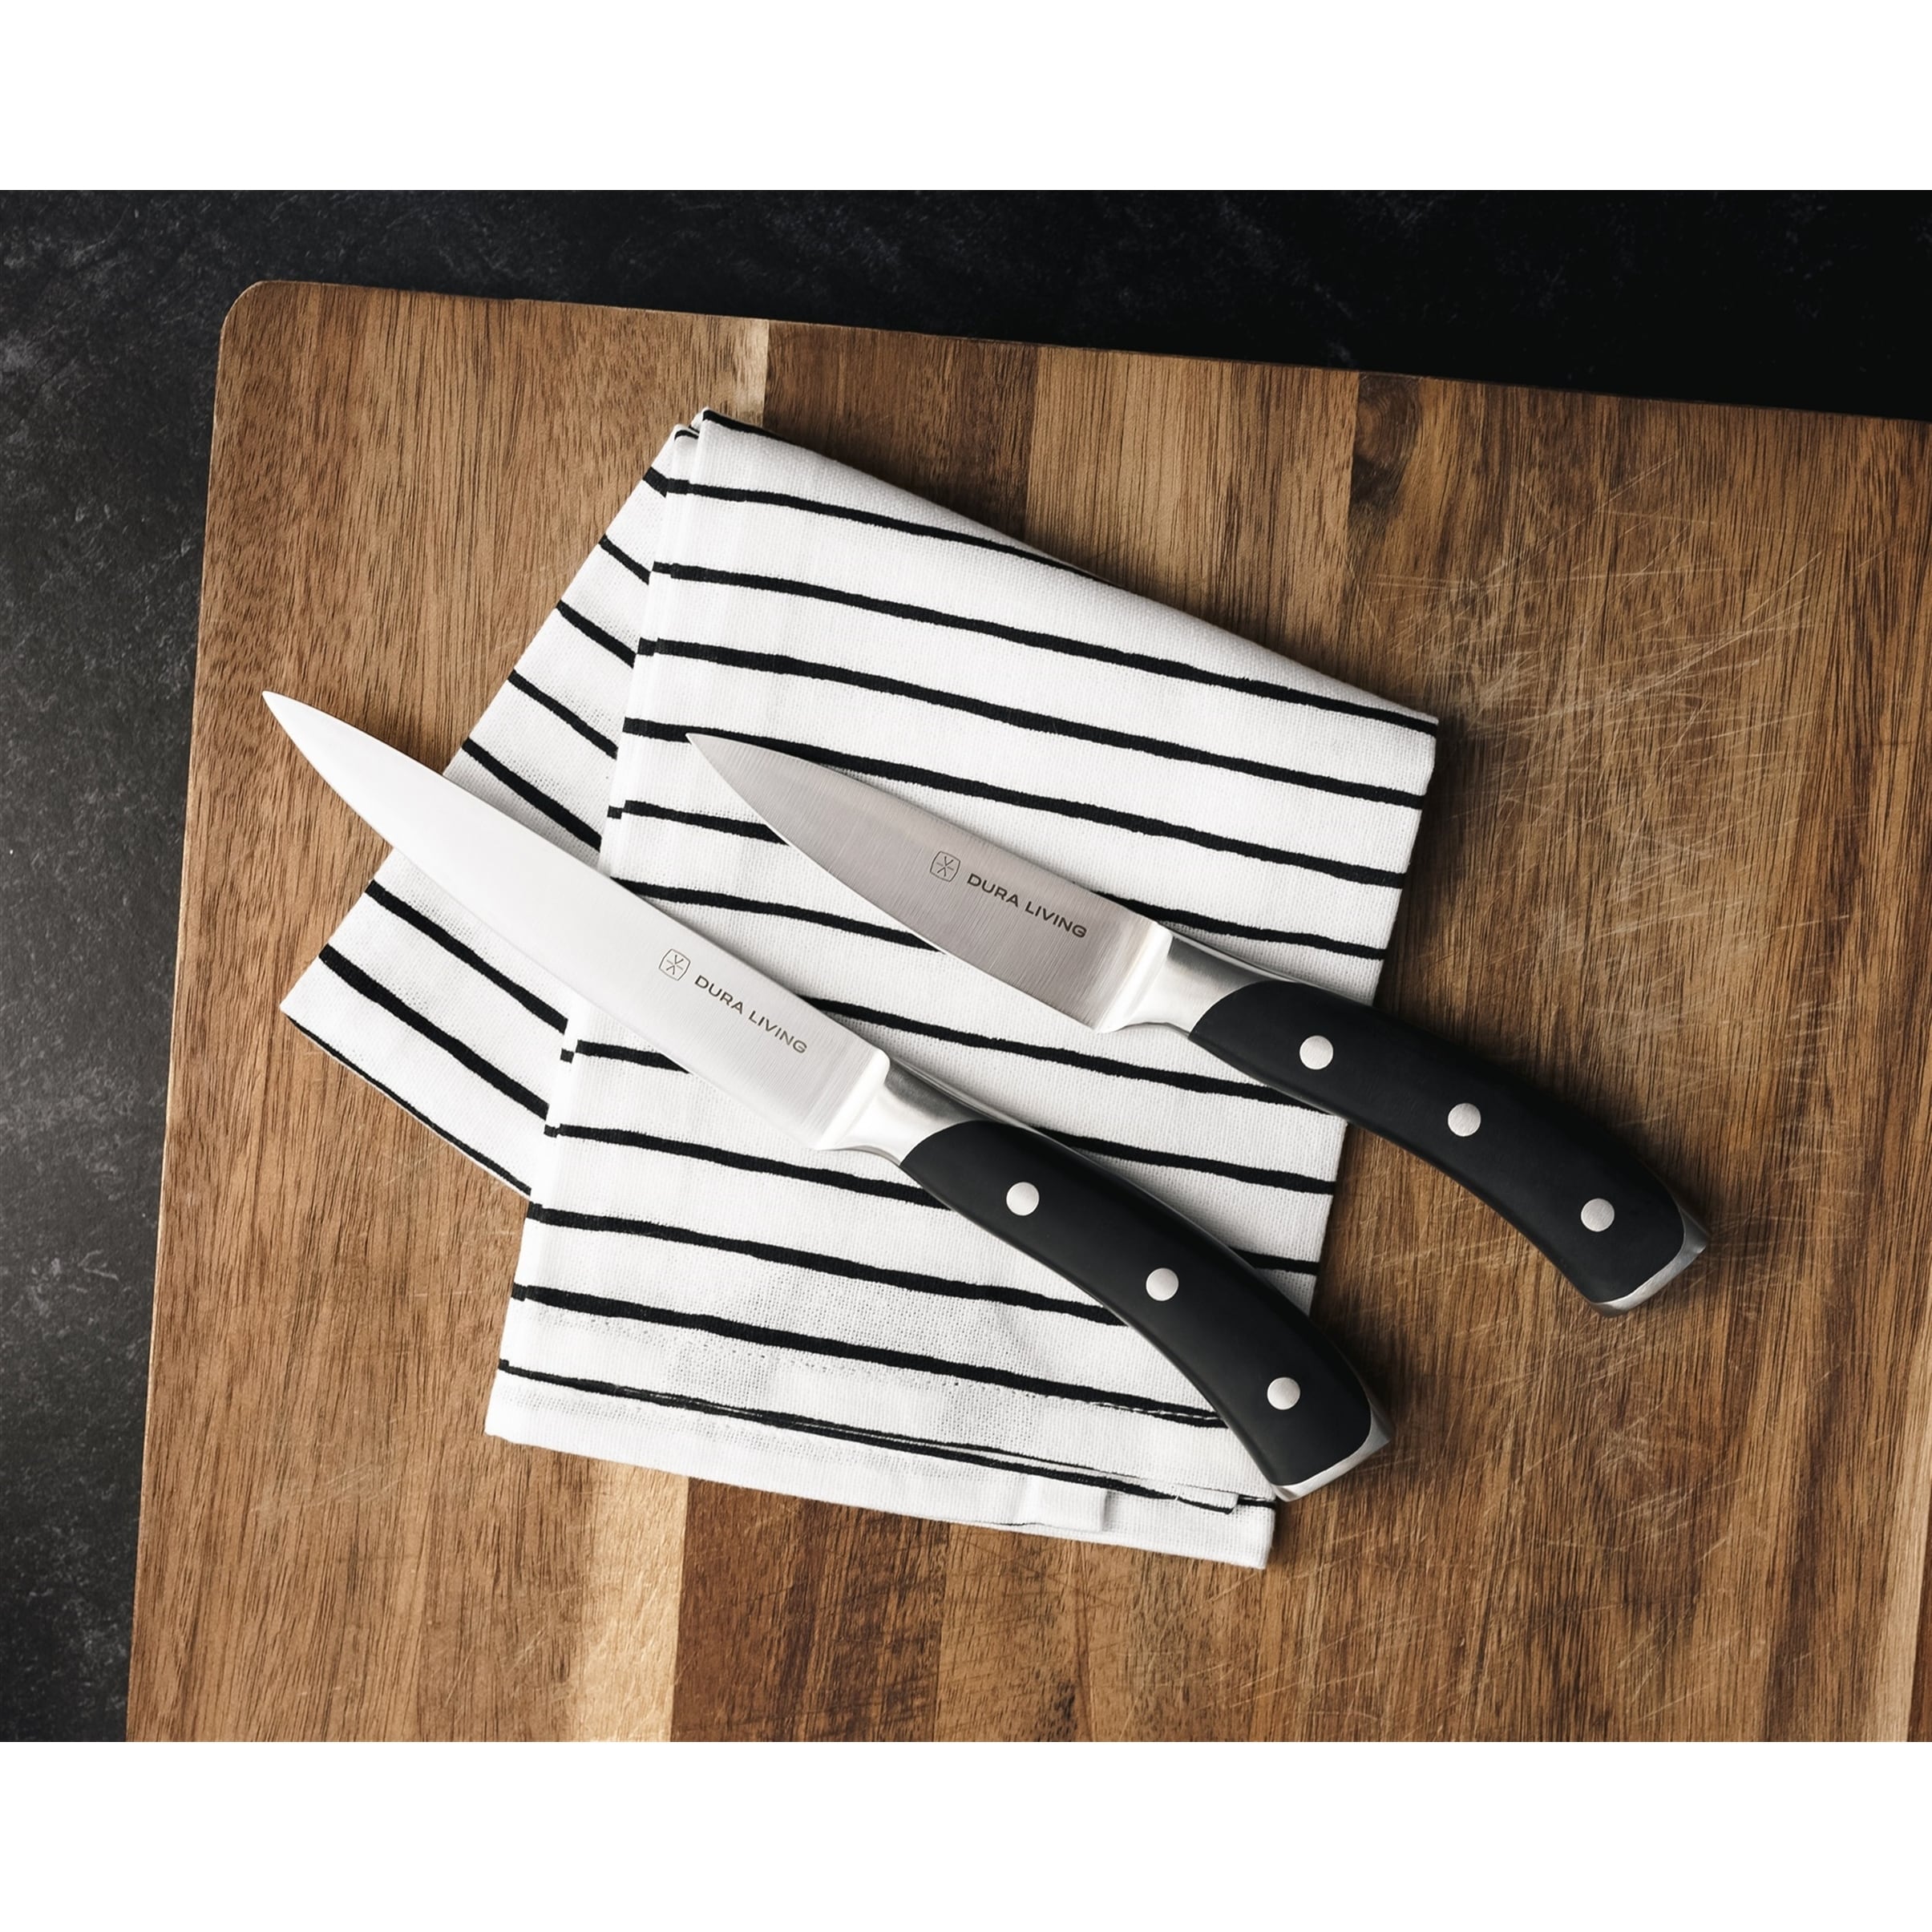 Duraliving 2-Piece Professional Kitchen Knife Set